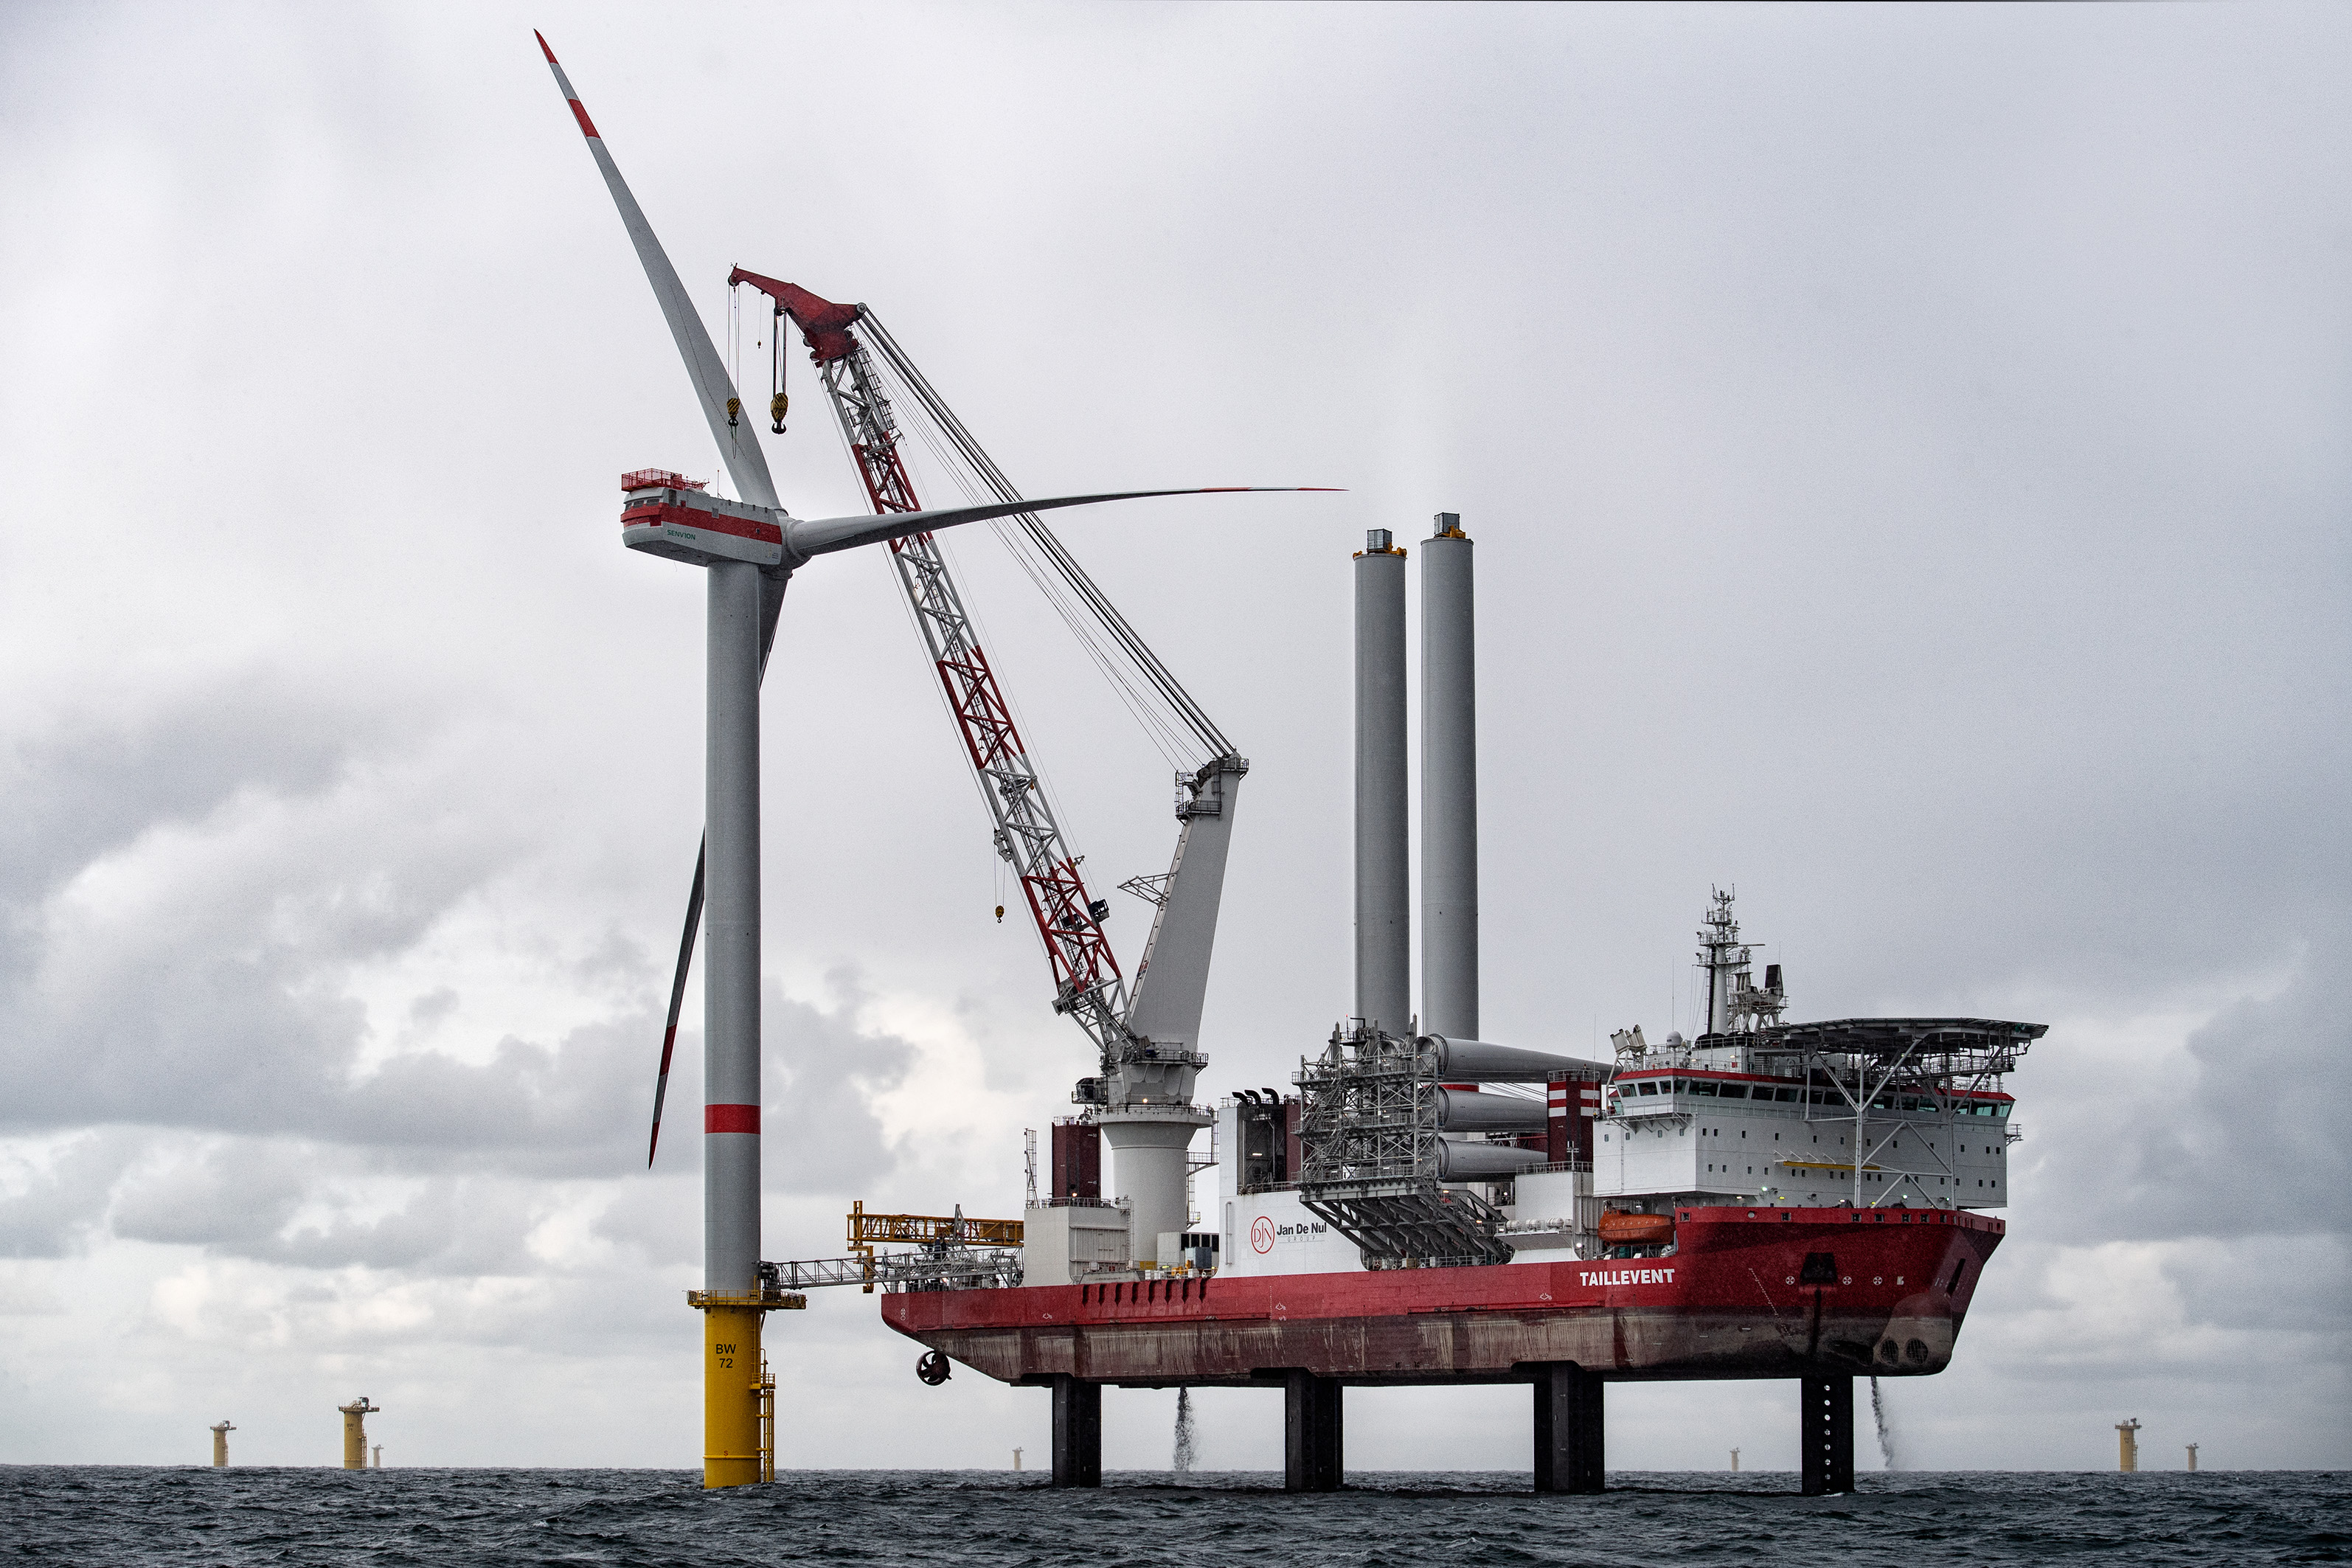 First Turbine Up at Trianel Windpark Borkum II | Offshore Wind